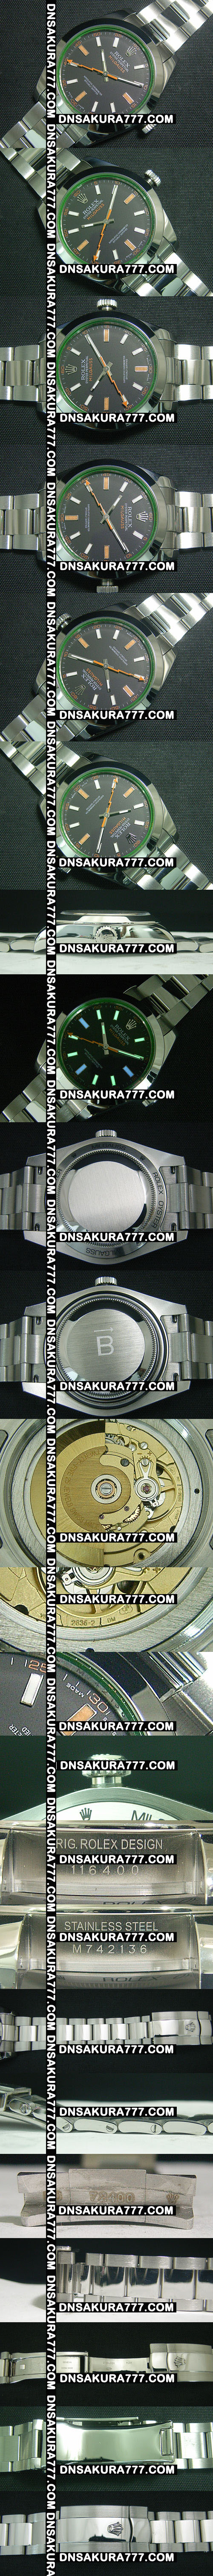 ROLEX ミルガウススーパーコピー時計 Swiss ETA 2836-2